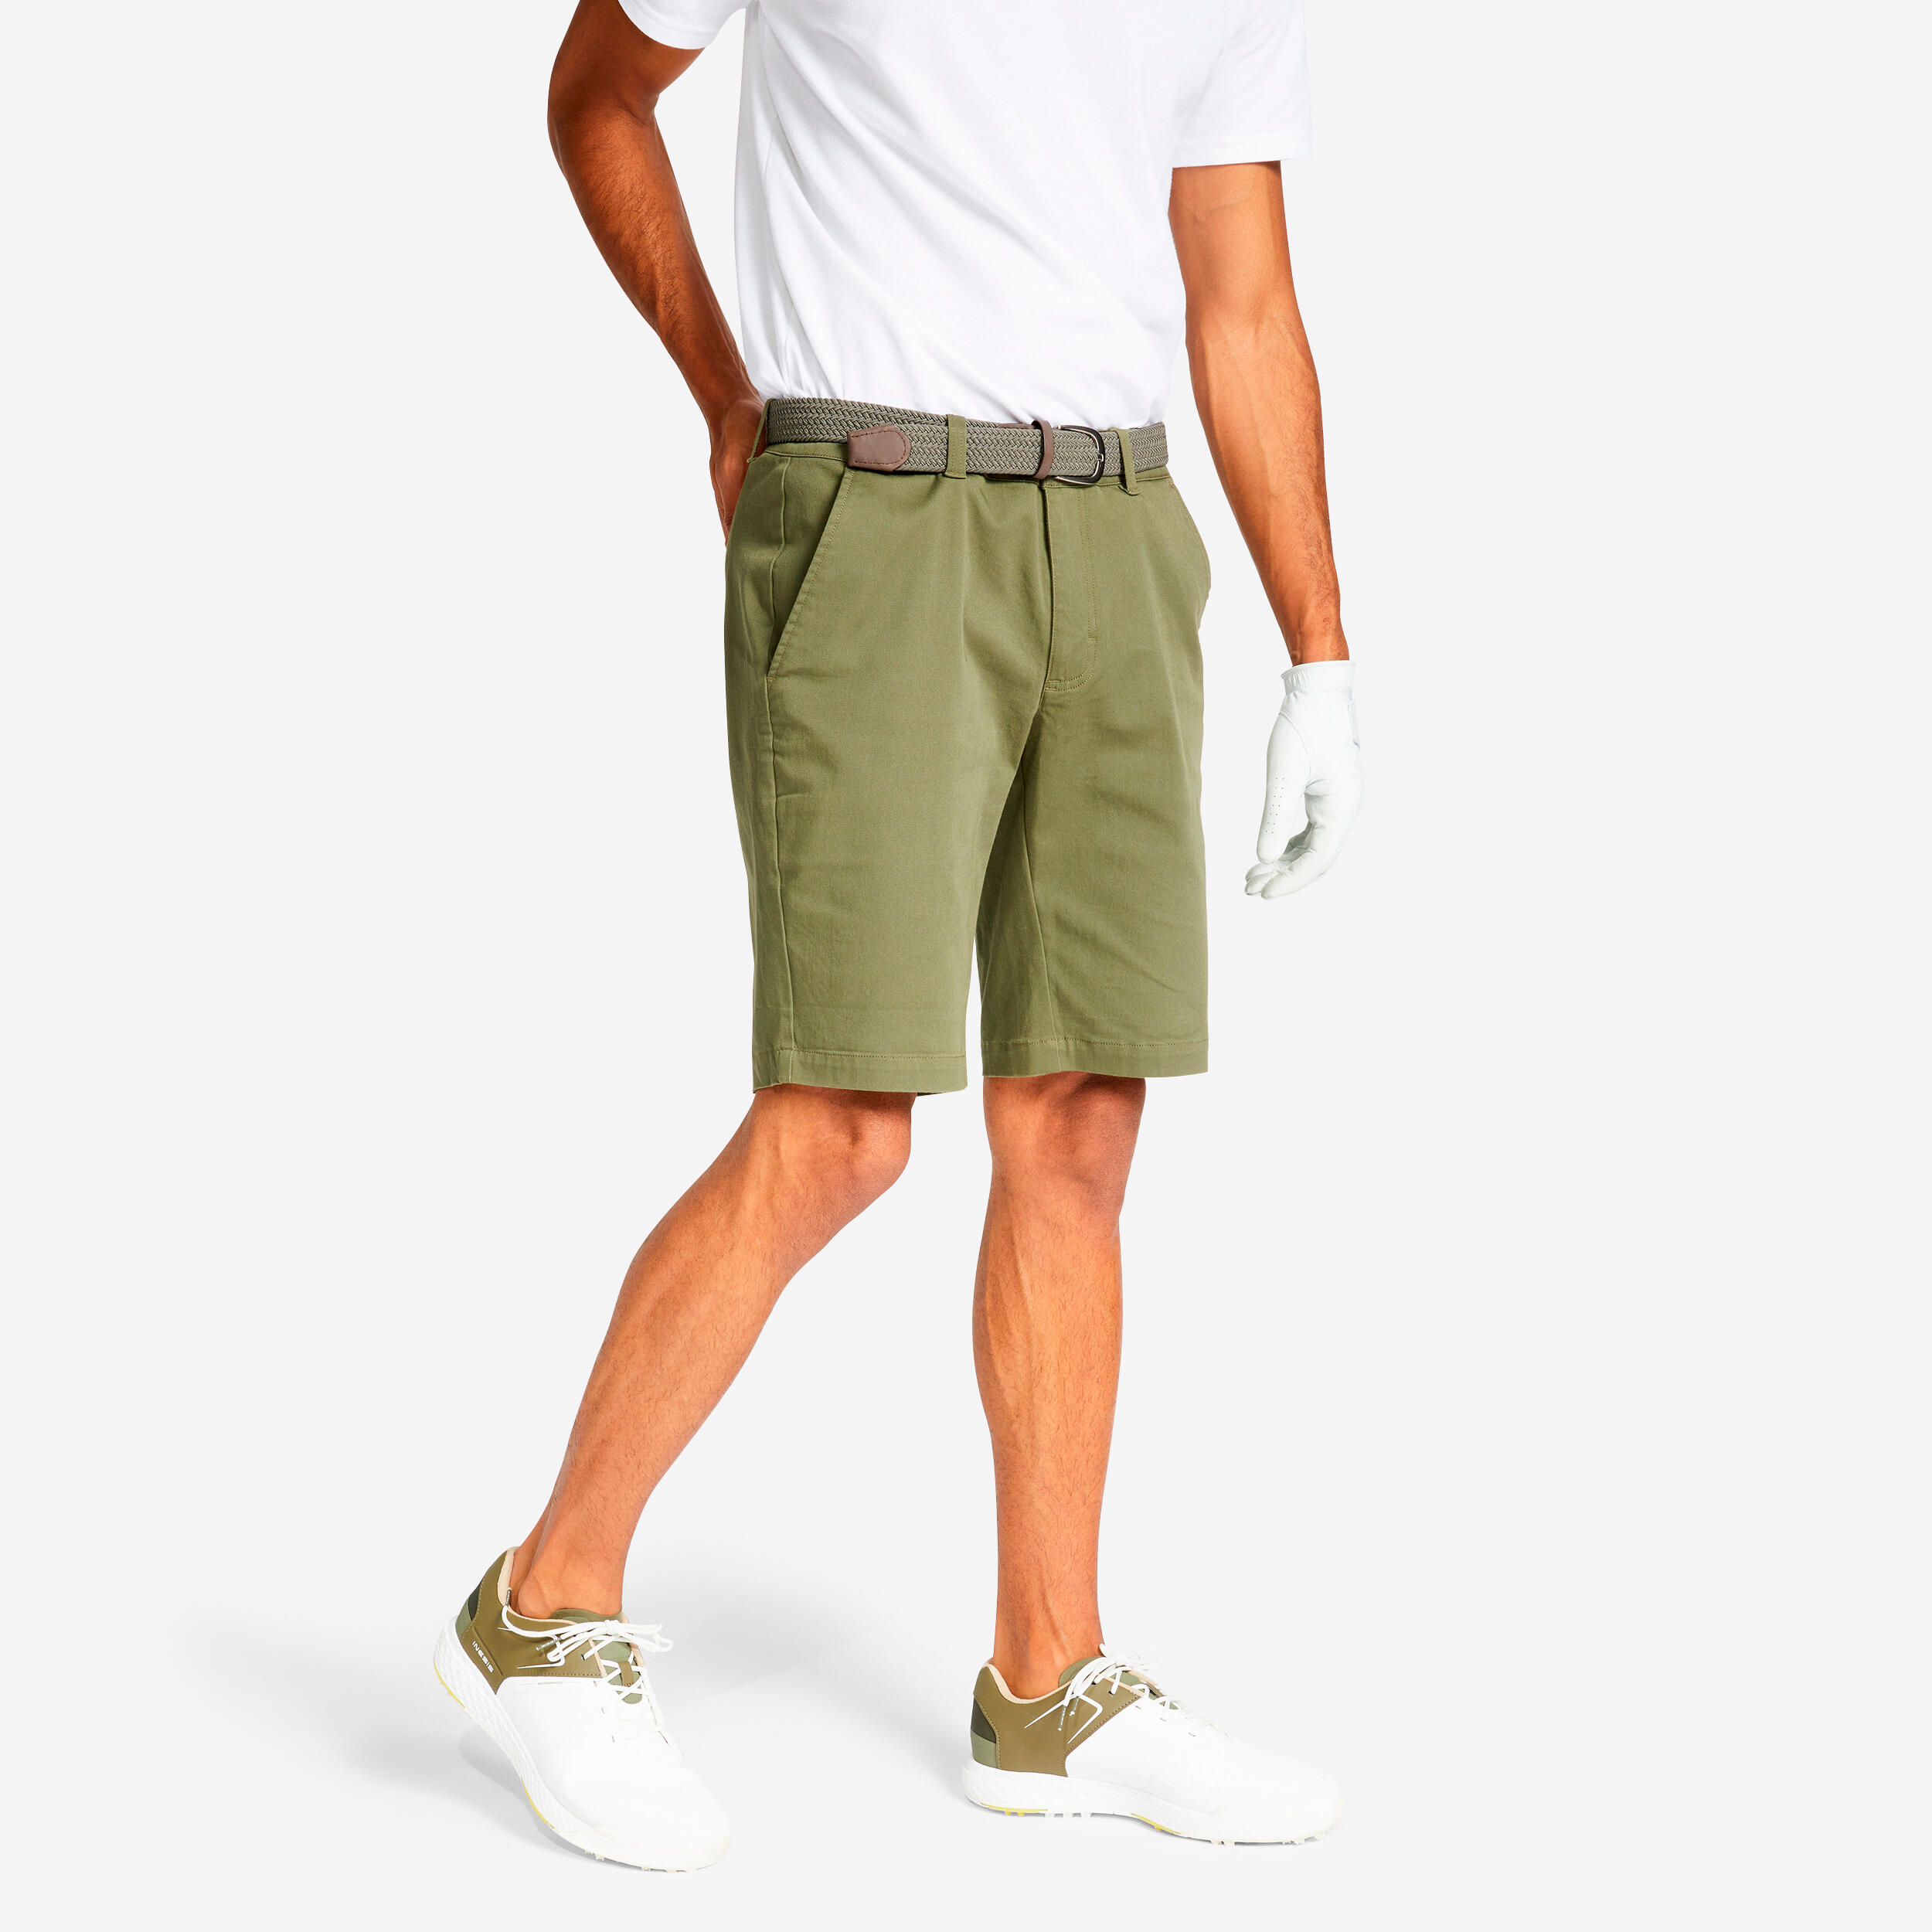 Polo de golf à manches courtes homme – MW 500 vert - Brun kaki - Inesis -  Décathlon